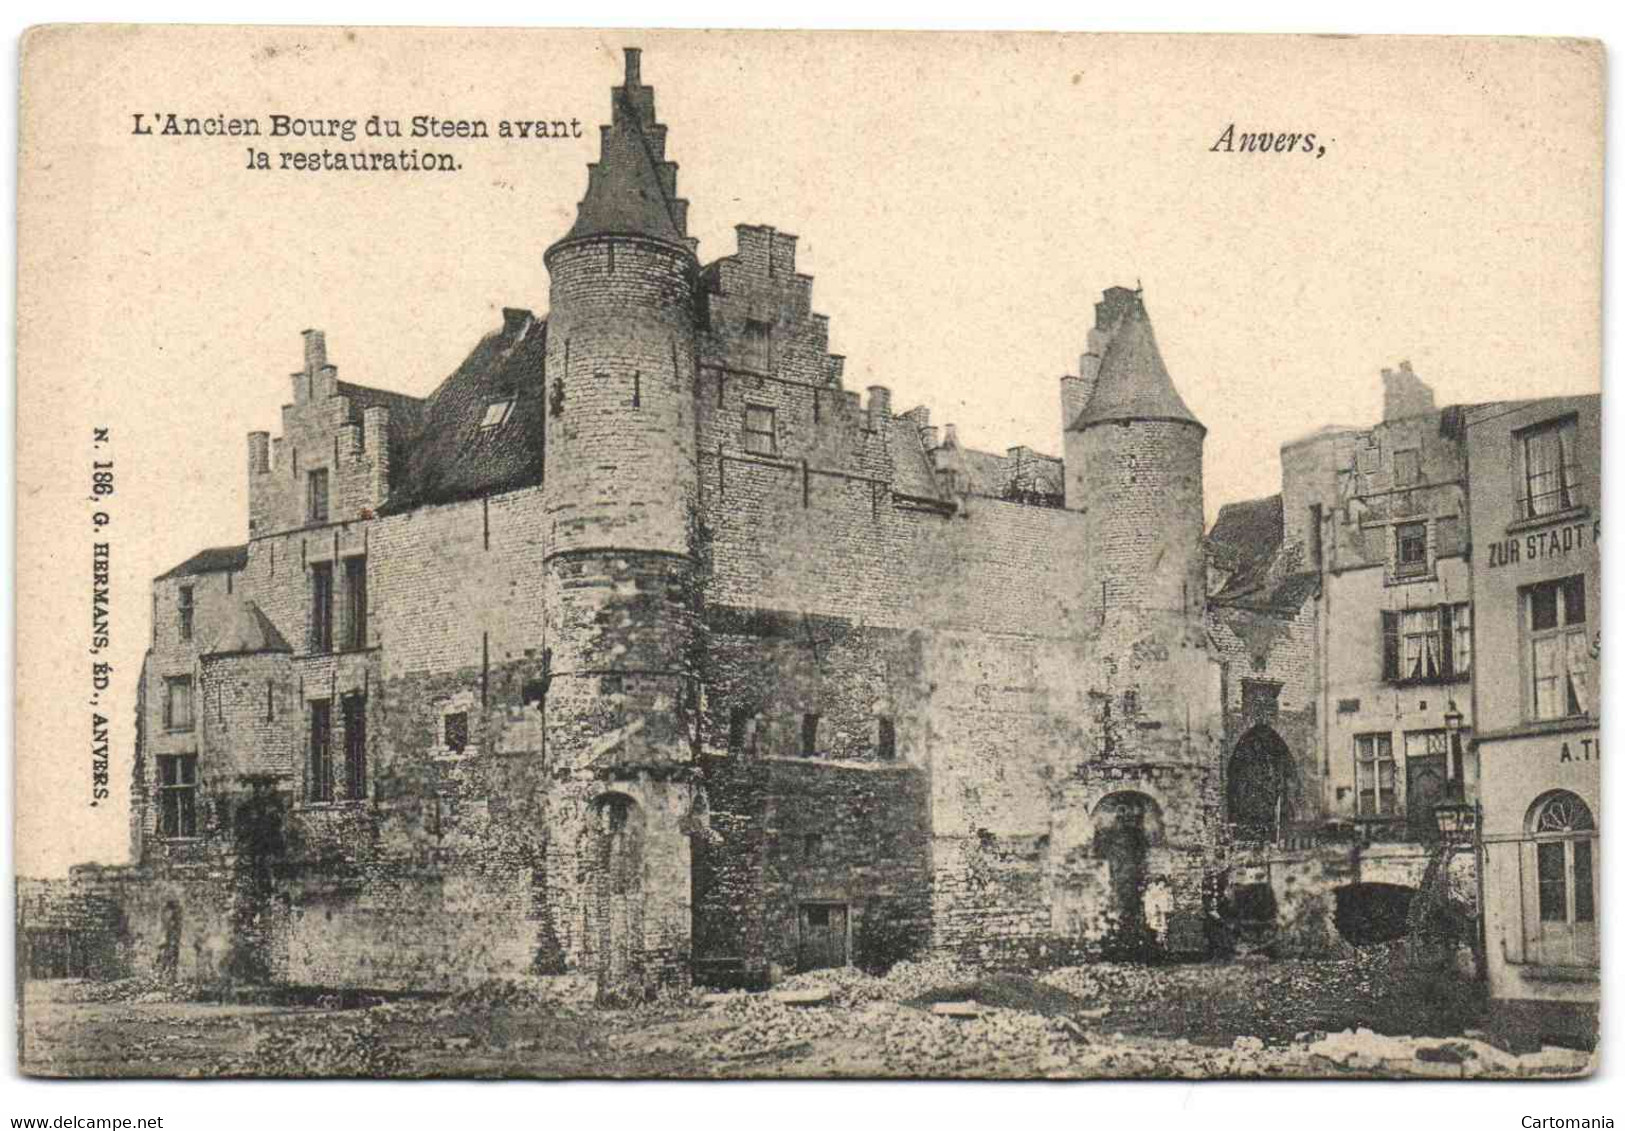 Anvers - L'Ancien Bourg Du Steen Avant La Restauration (G. Hermans N 186) - Antwerpen